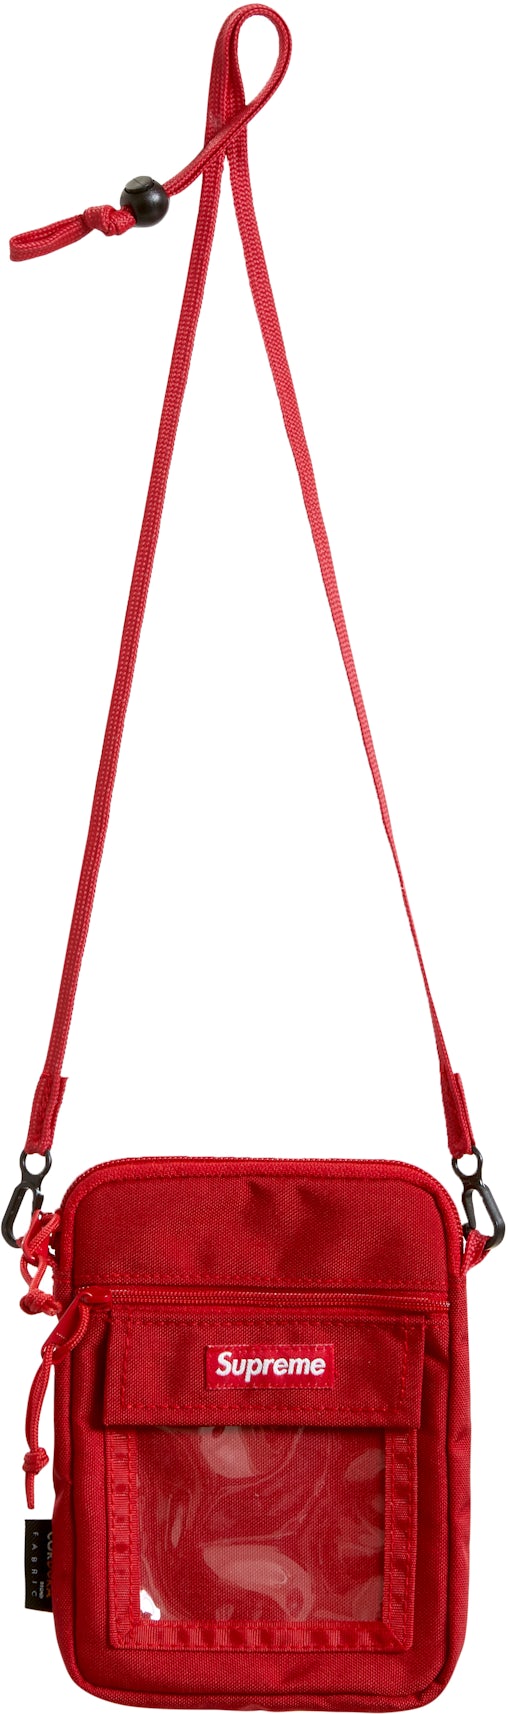 Supreme Utility Pouch Camoflauge Nylon Cordura SS19 Shoulder Bag